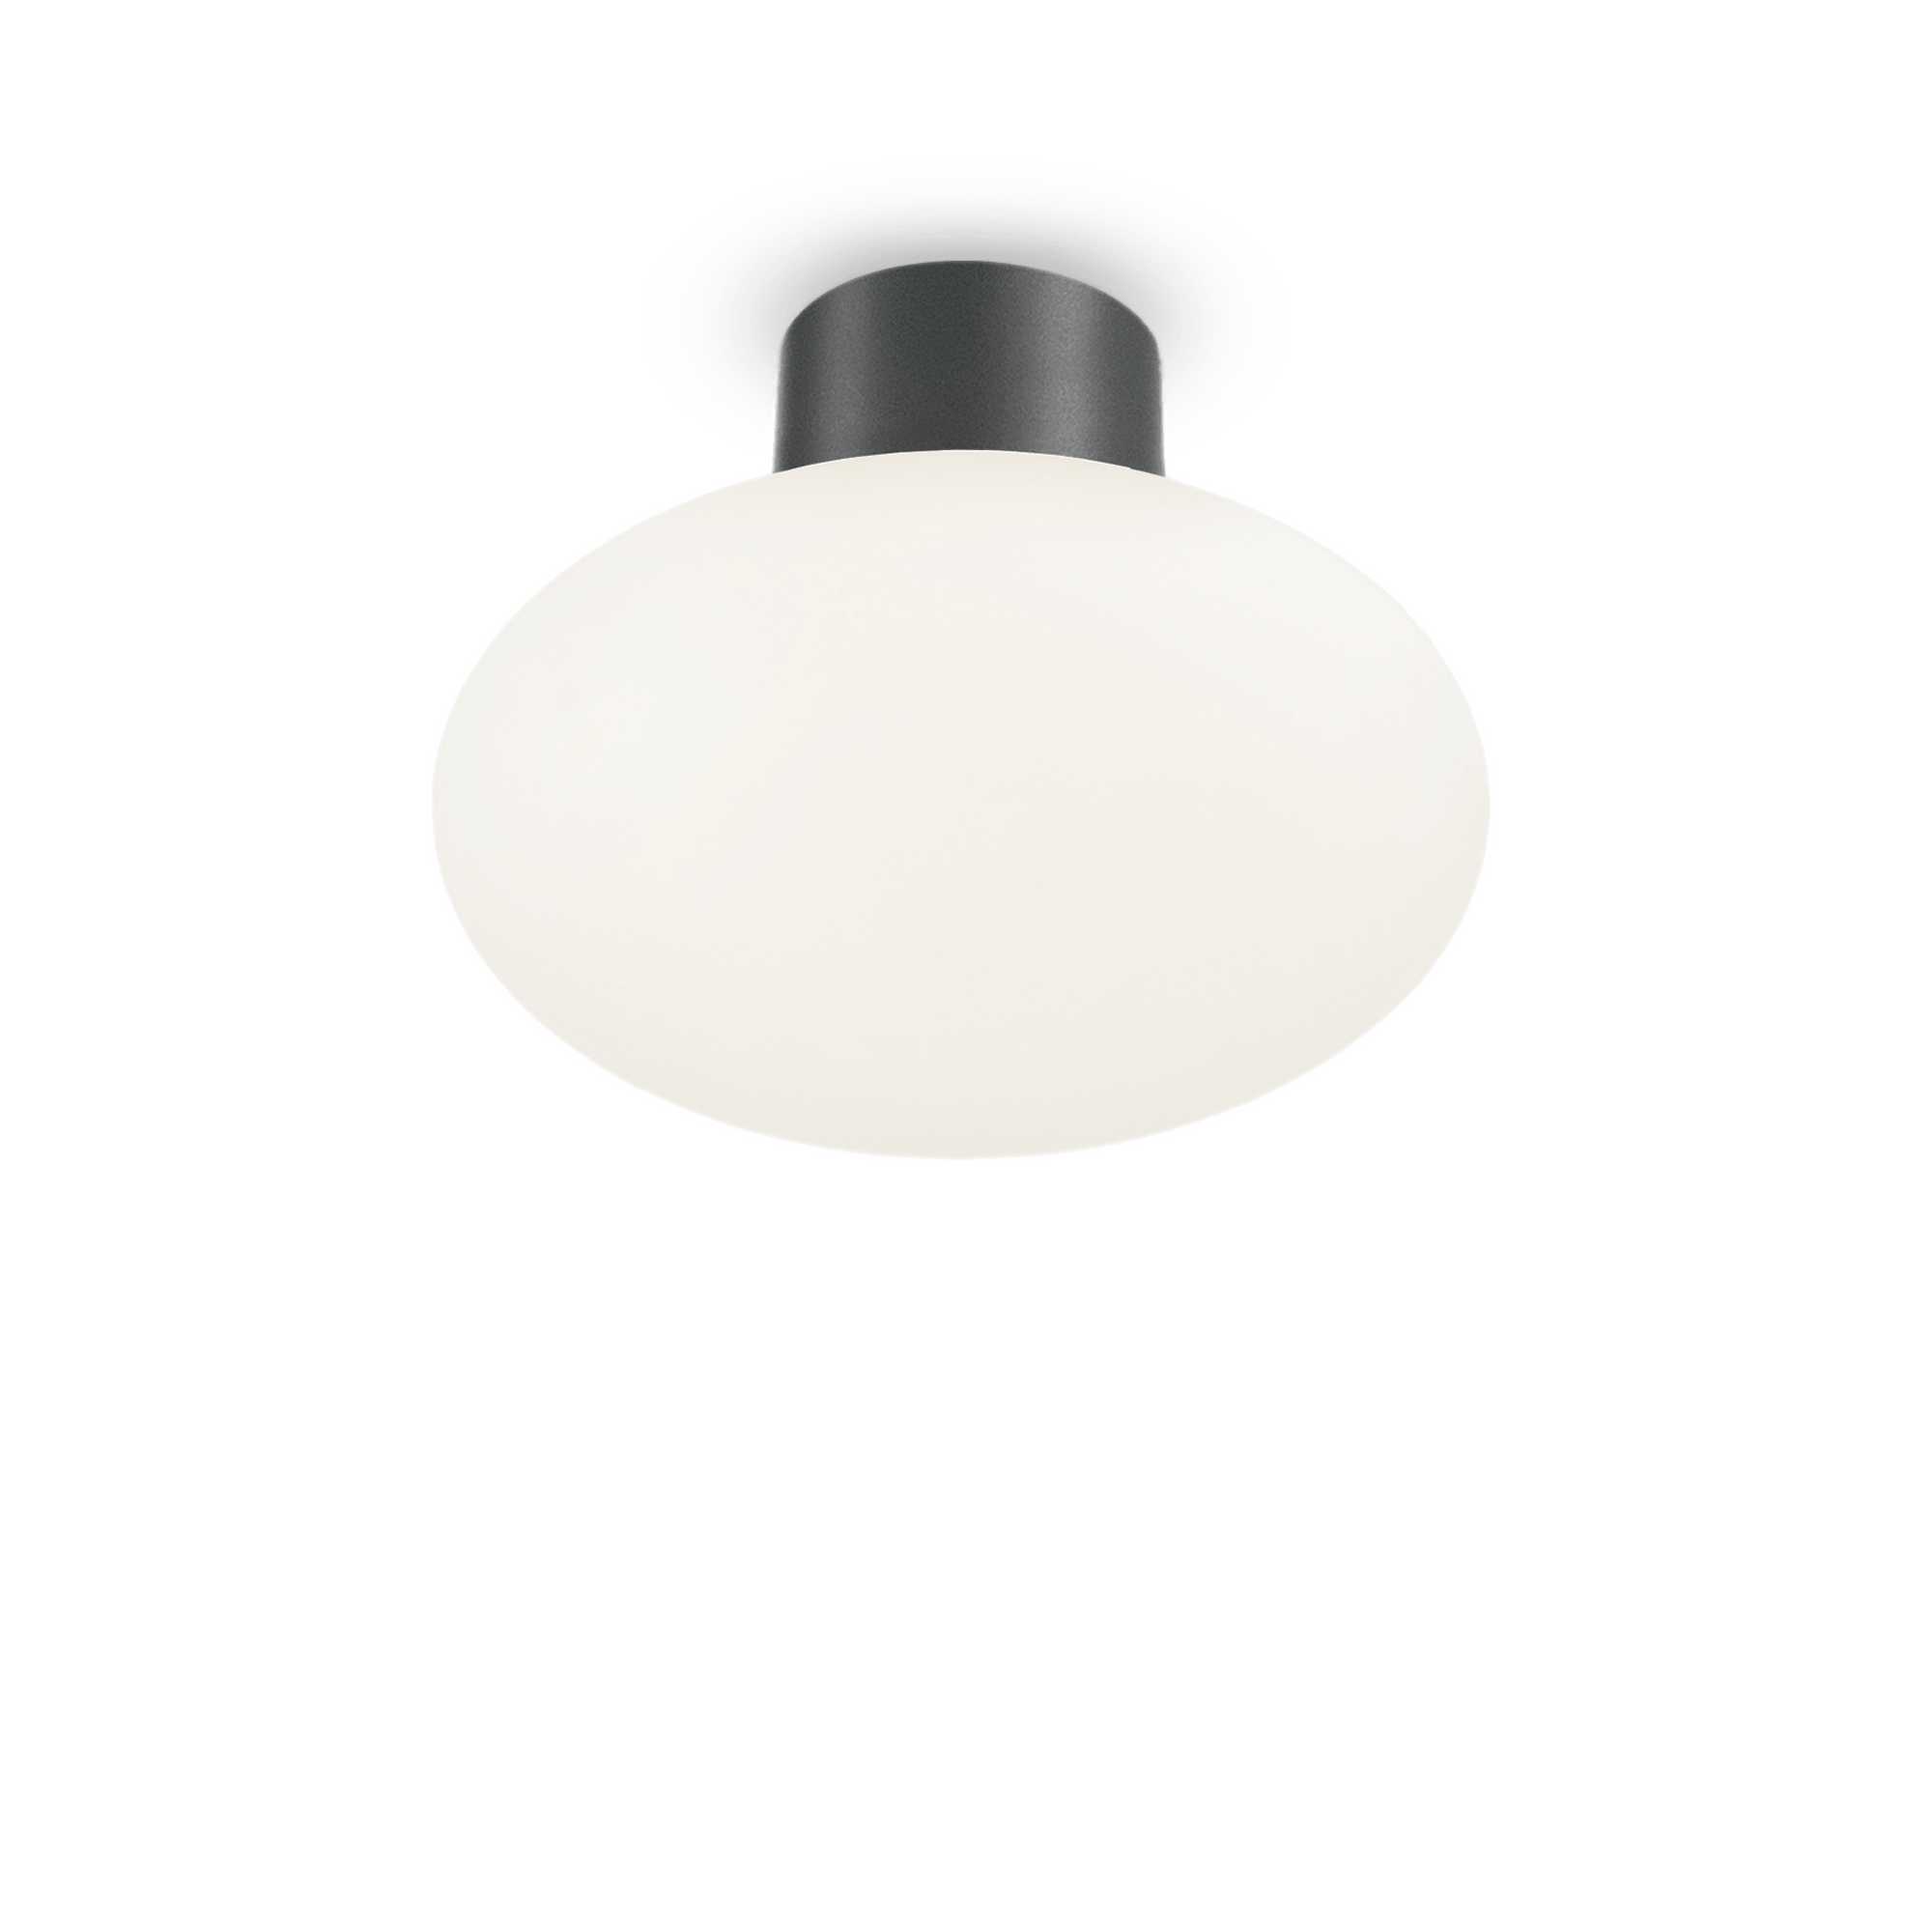 AD hotelska oprema Vanjska stropna lampa Clio mpl1- Antracit slika proizvoda